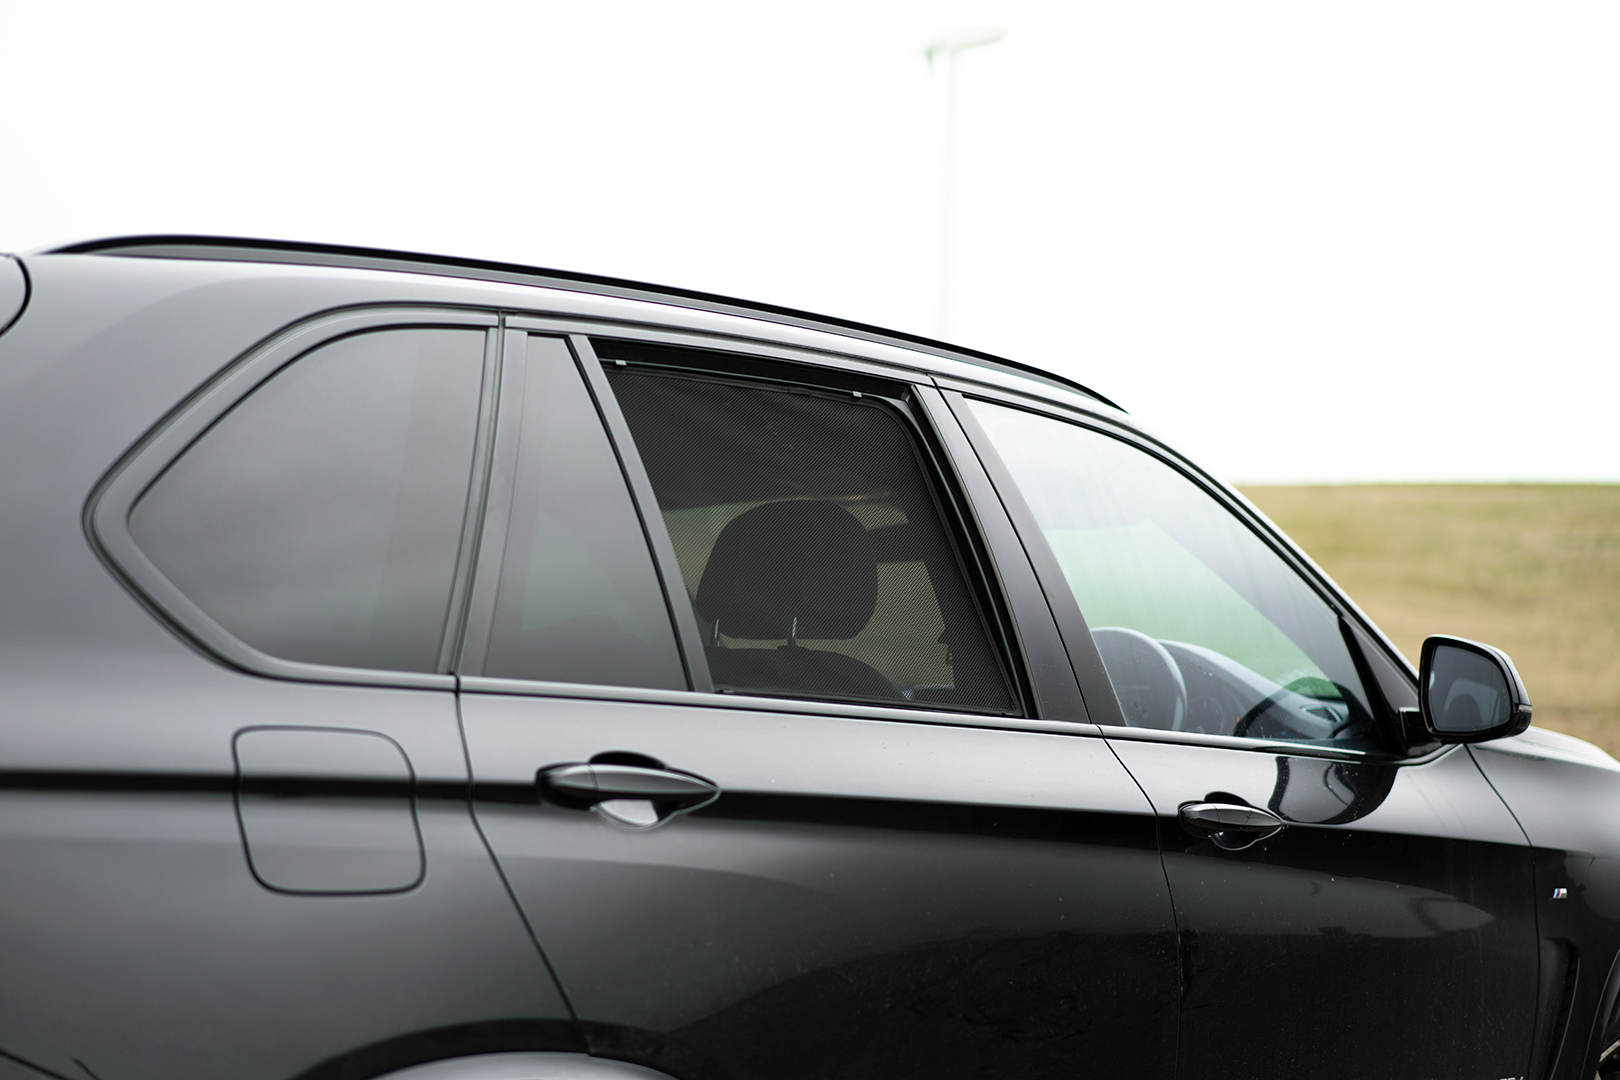 Car Shades - BMW X5 5 Door (F15) 2014-17 - Rear Door Set